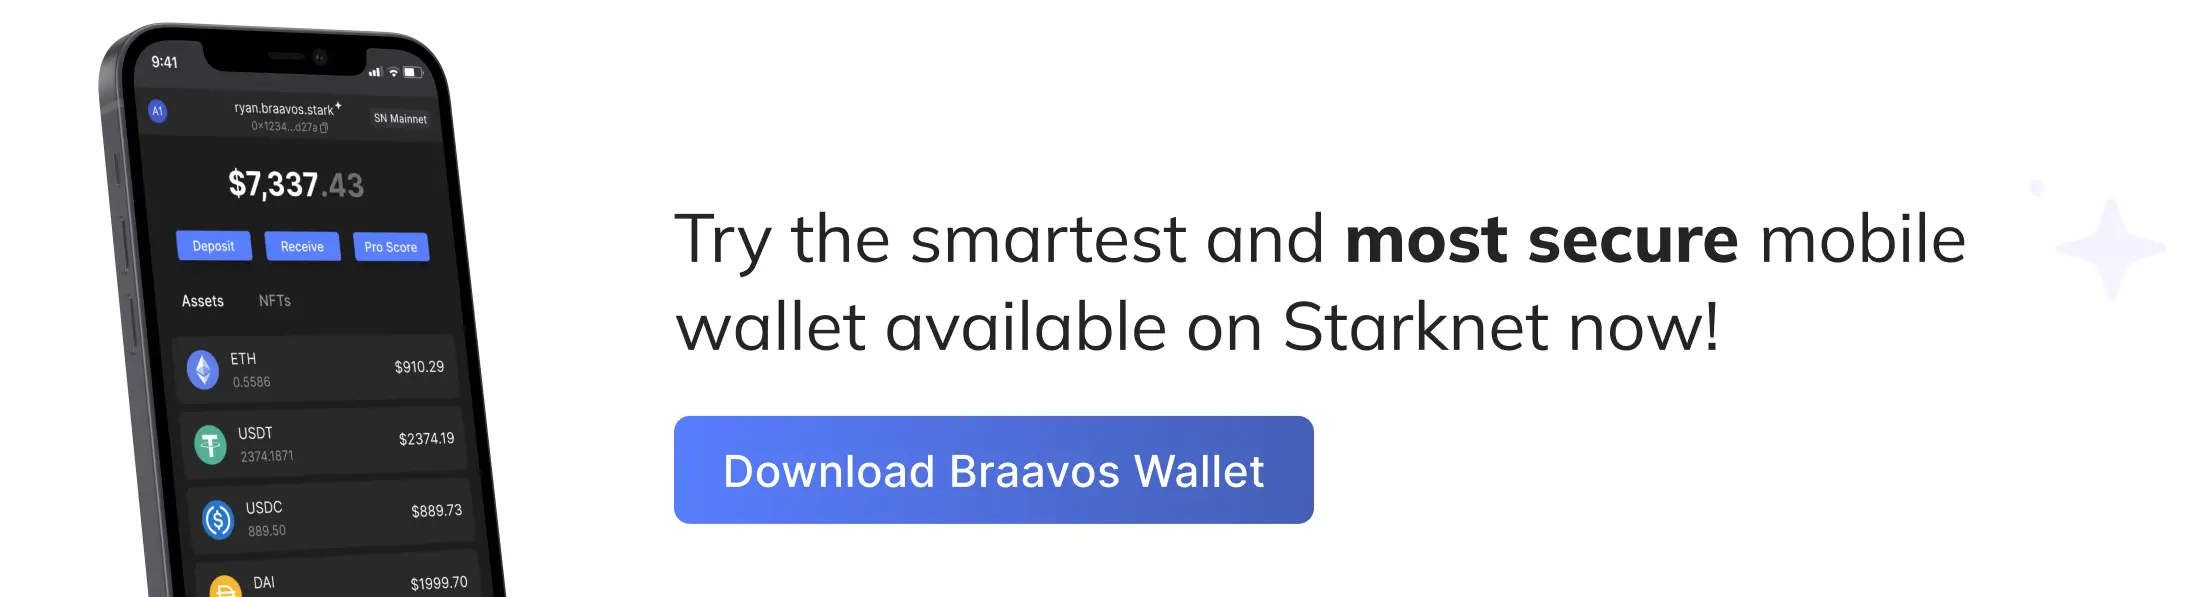 Download Braavos Wallet